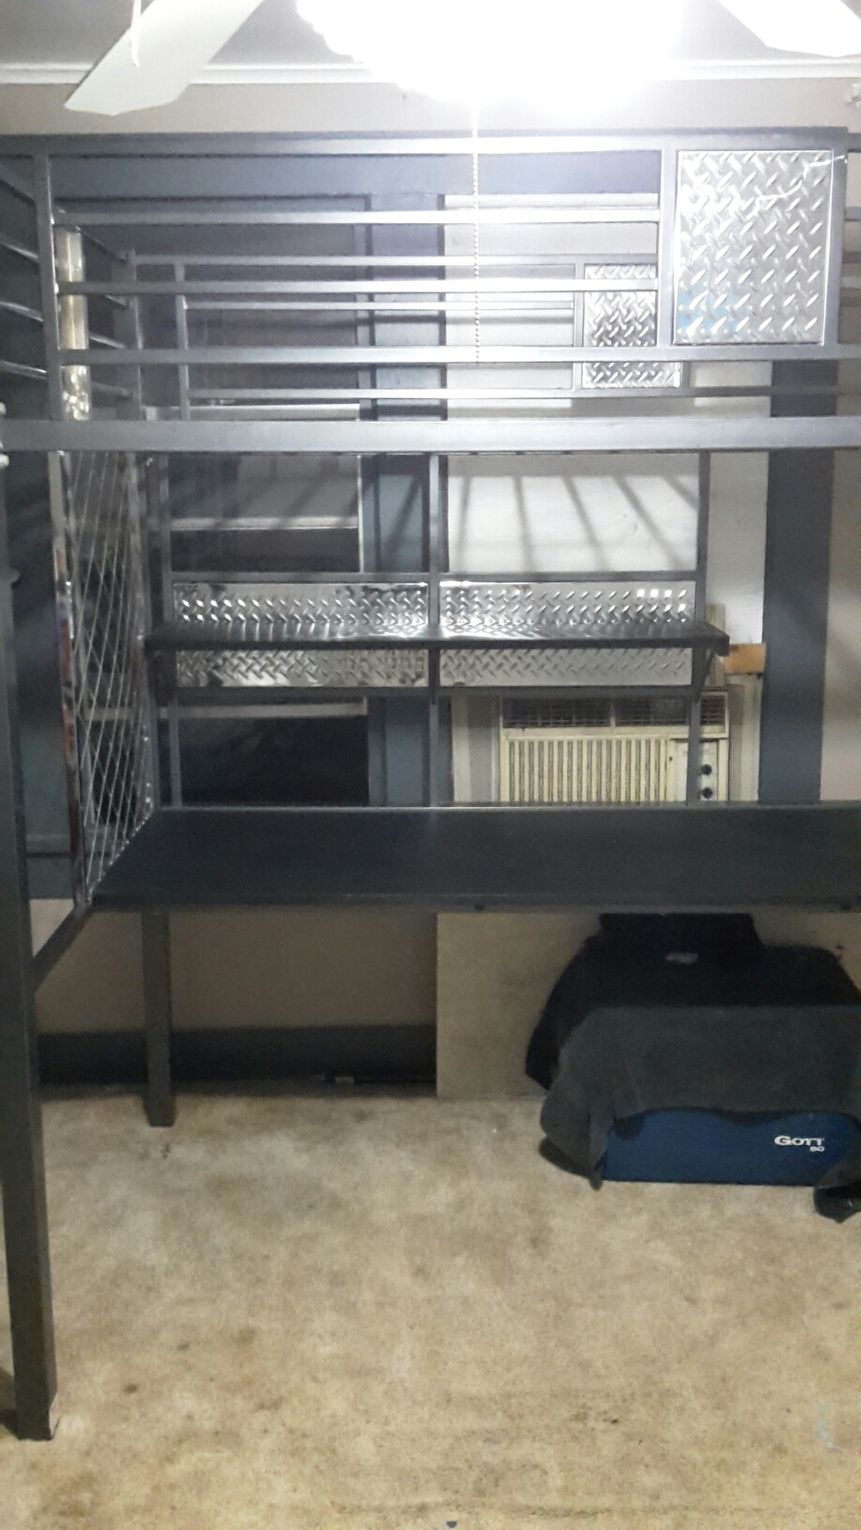 Computer desk/ bunk bed